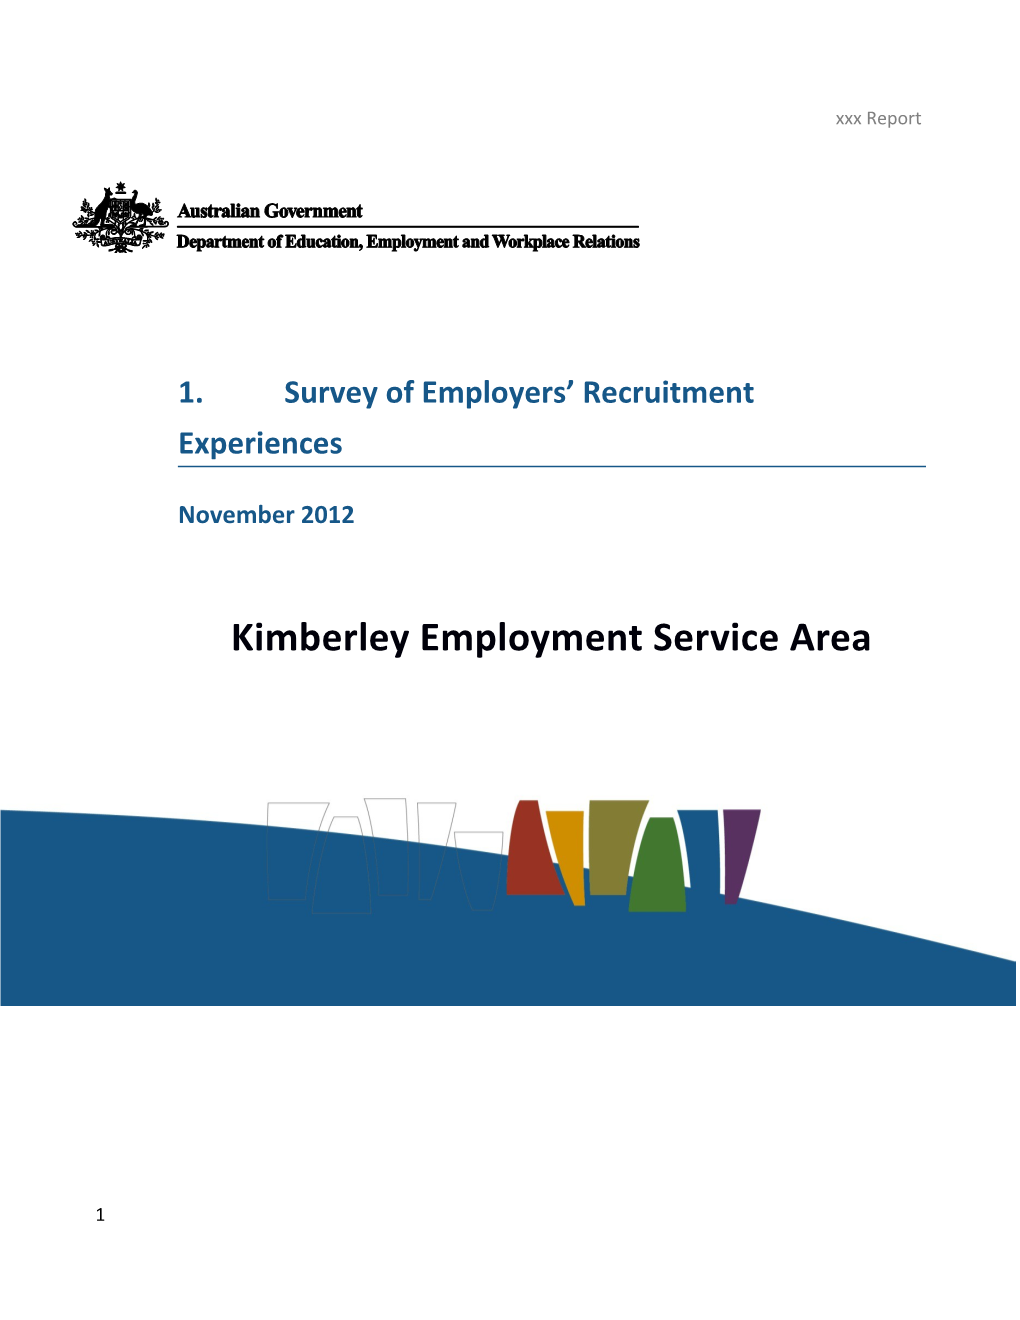 Kimberley Employment Service Area